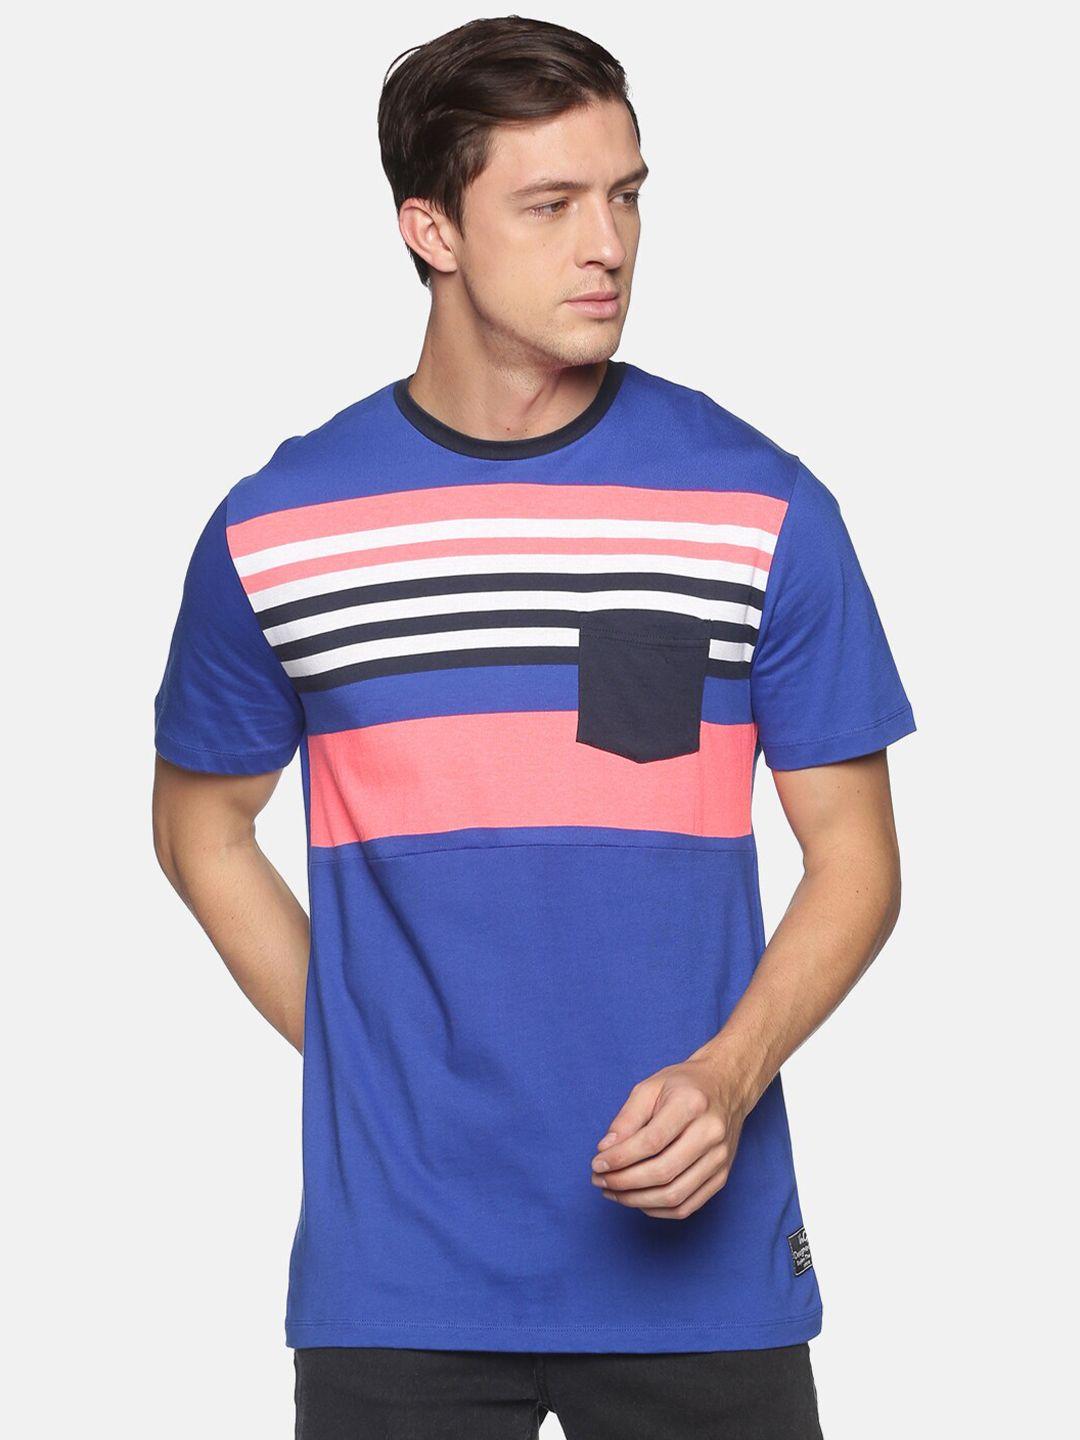 urgear-men-blue-&-pink-striped-pockets-t-shirt